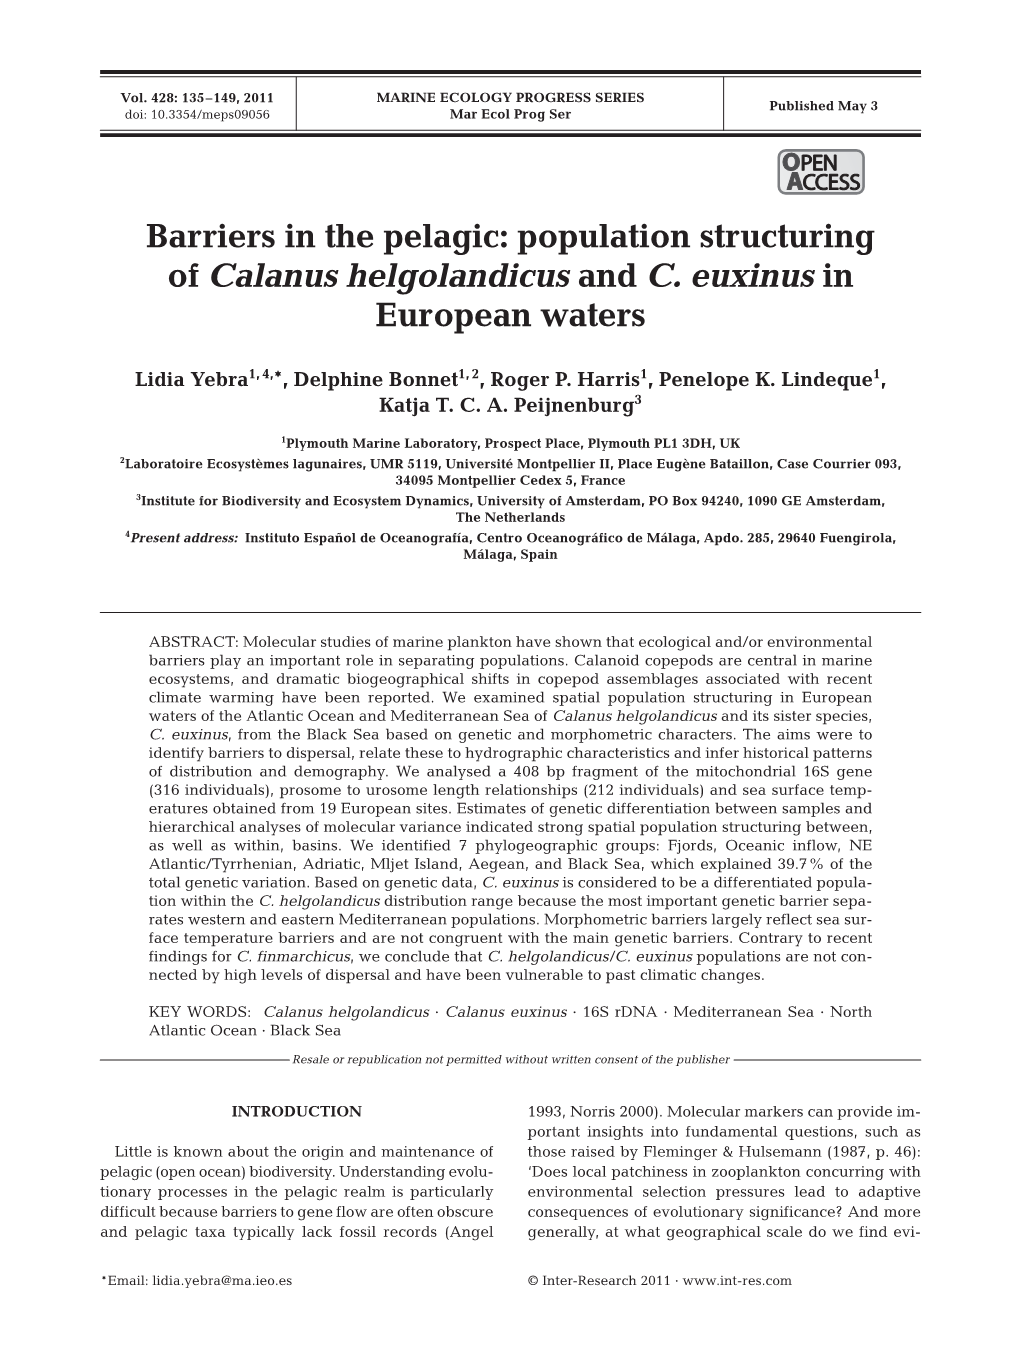 Barriers in the Pelagic: Population Structuring of Calanus Helgolandicus and C